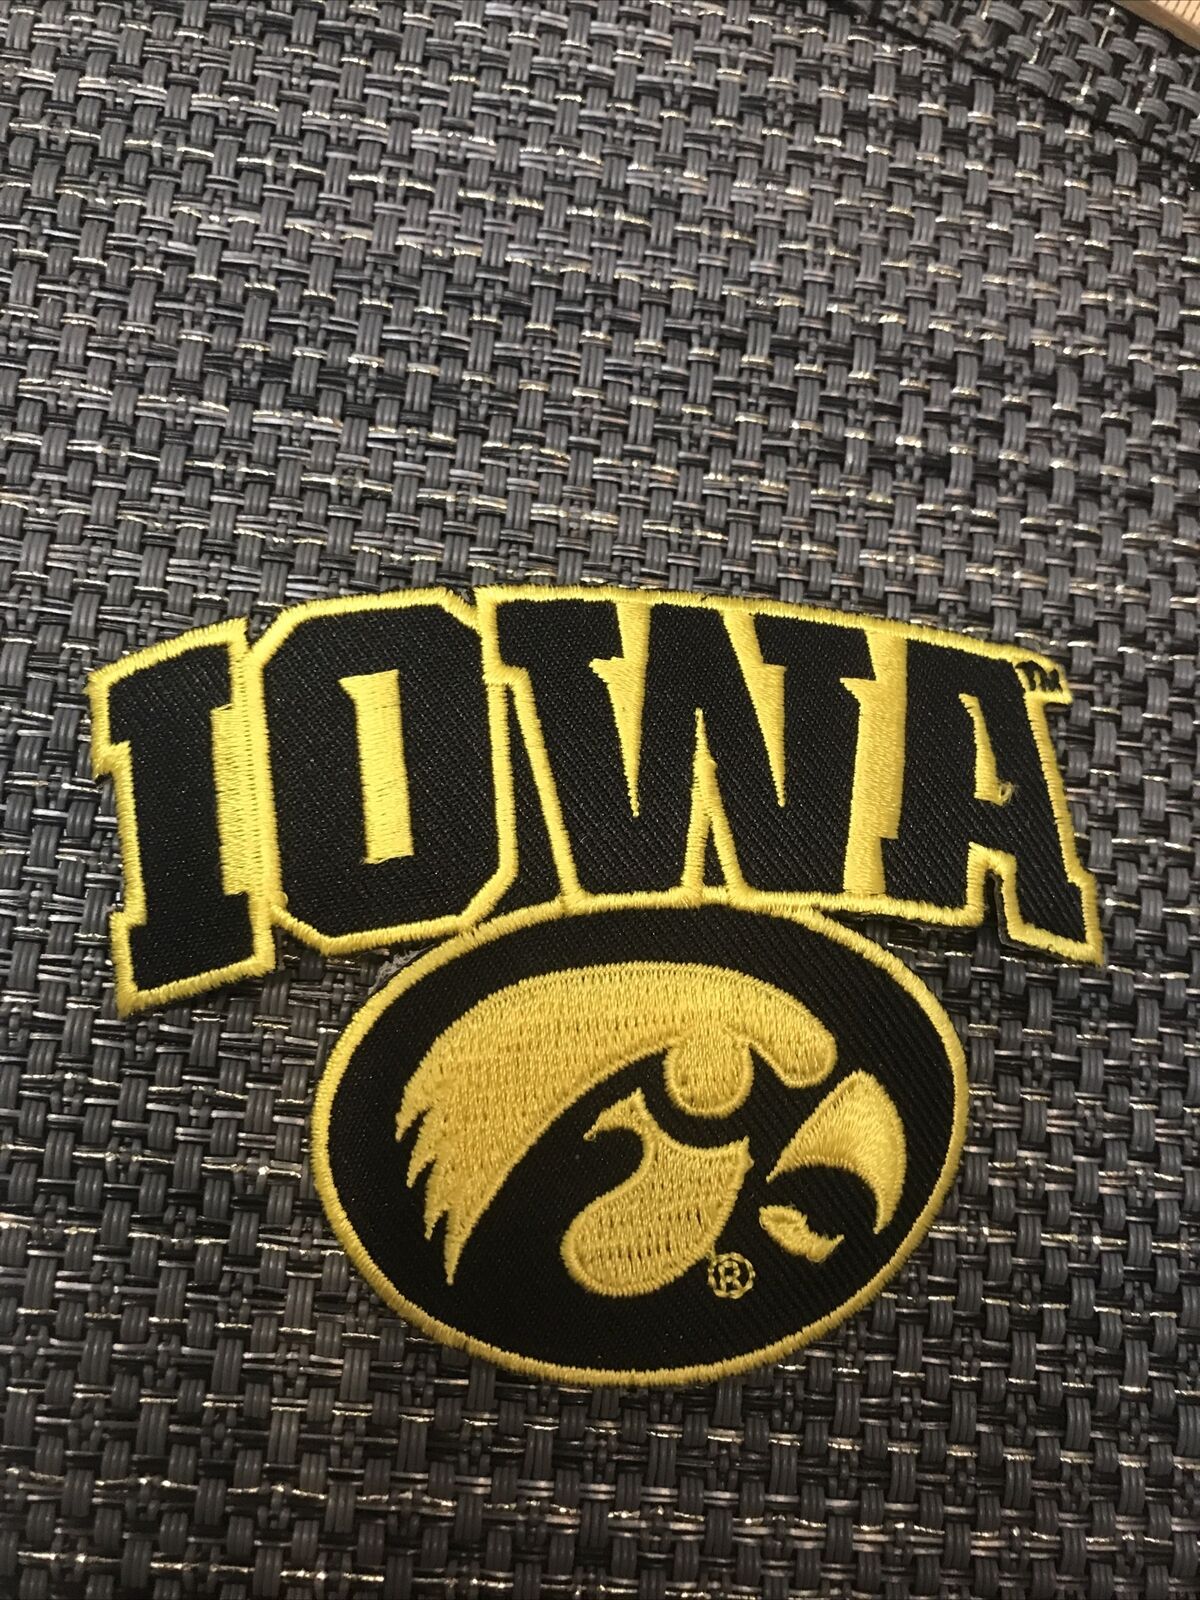 Iowa Hawkeyes vintage iron on